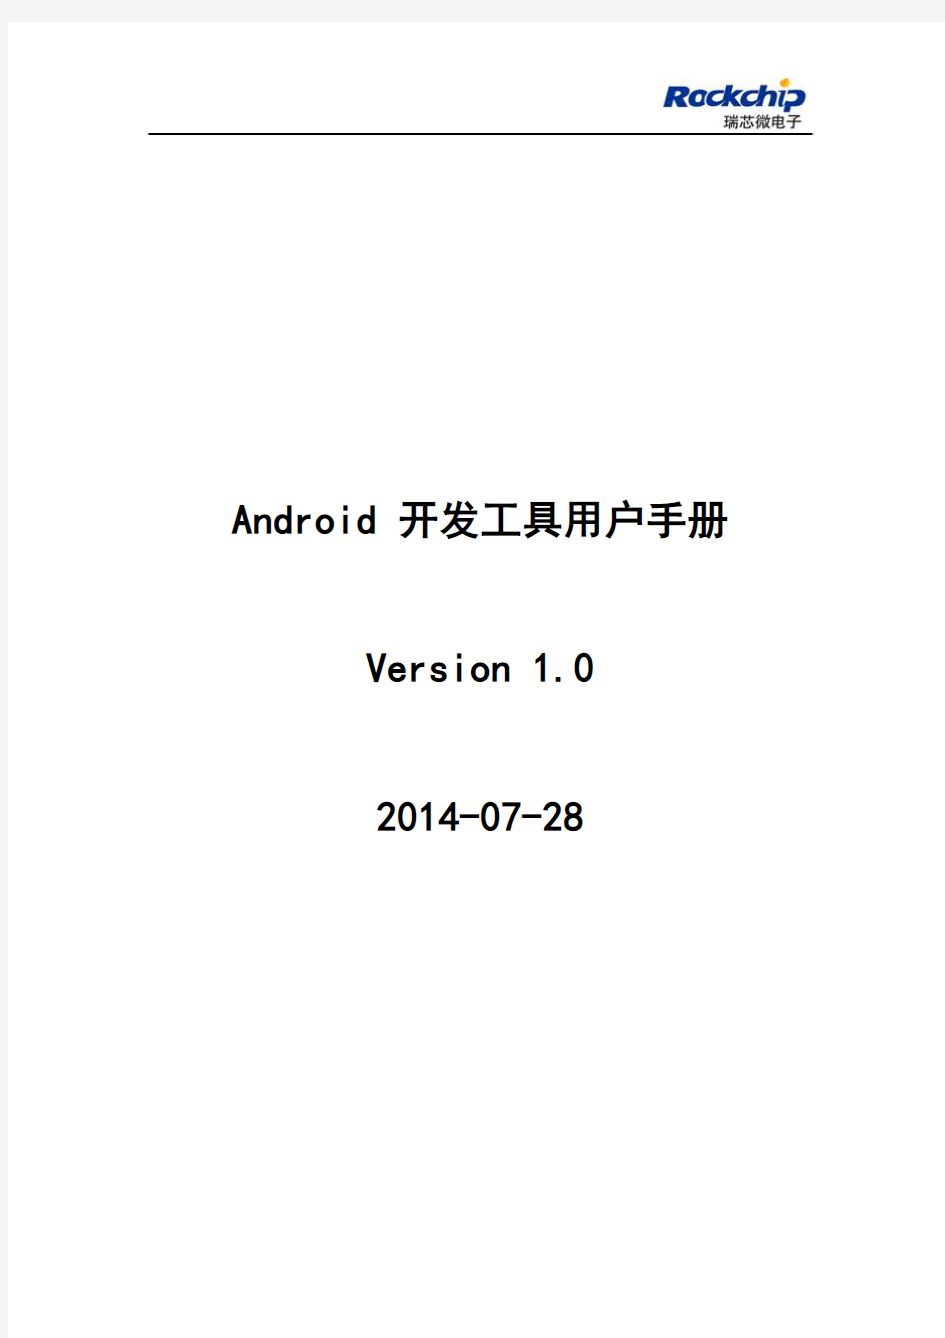 Android开发工具手册